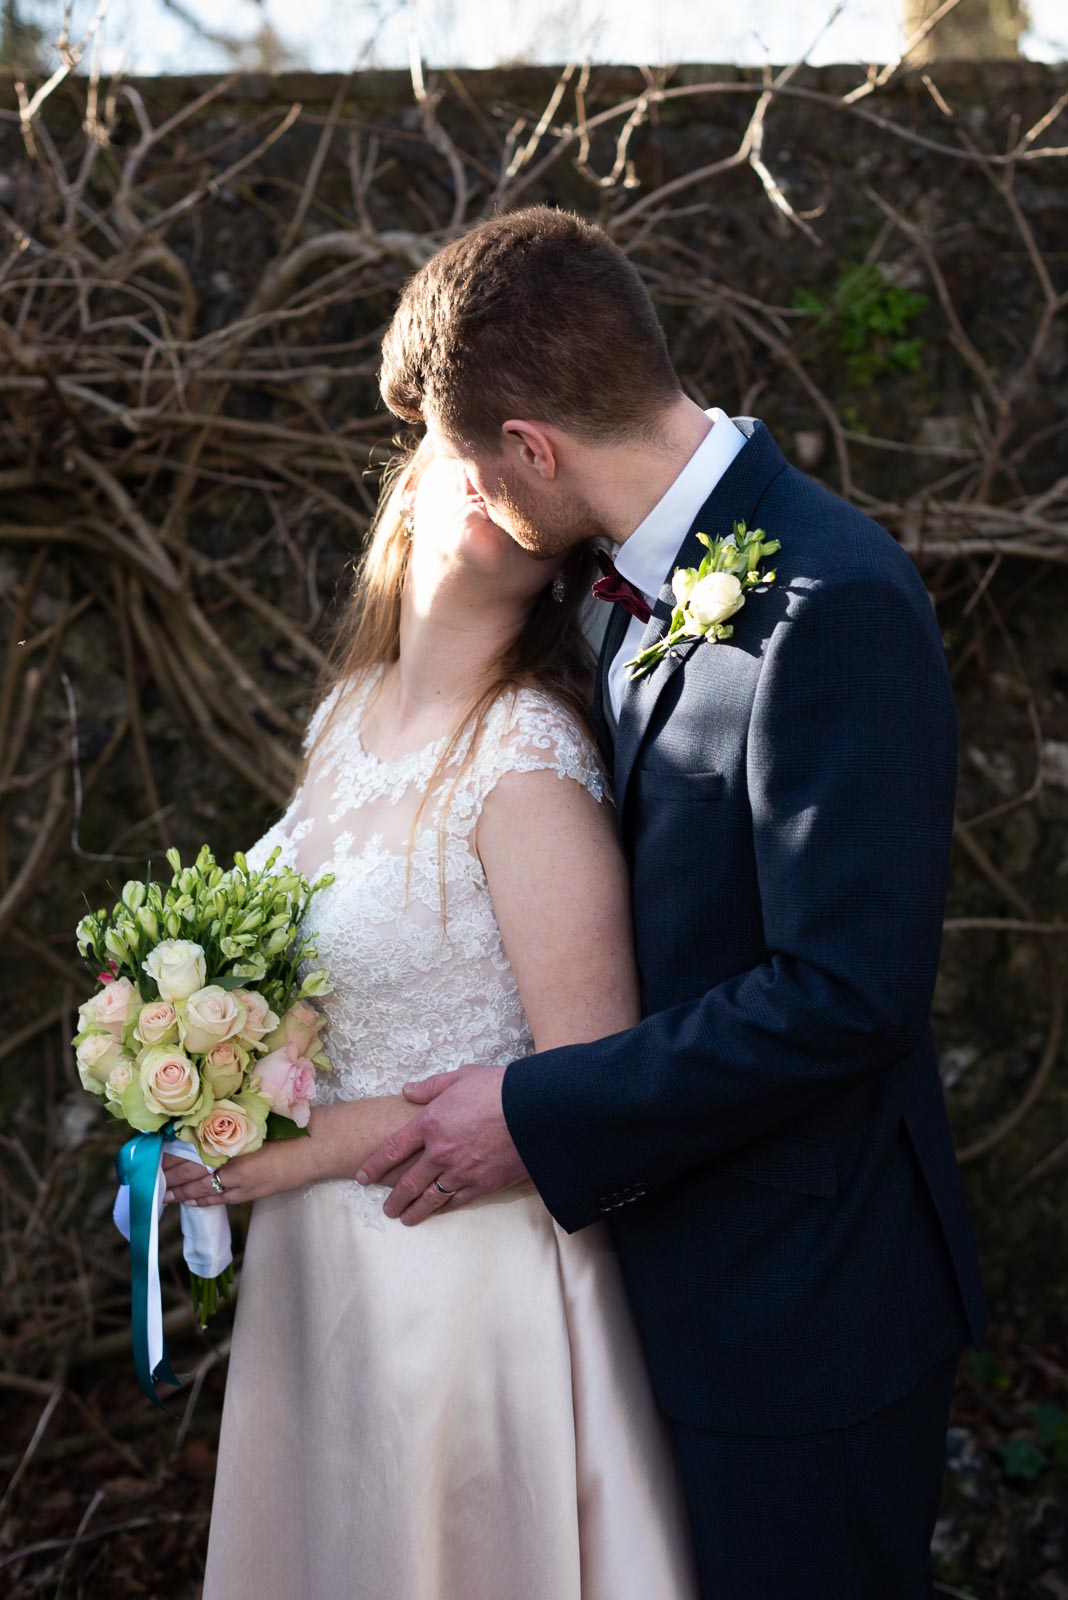 Belinda and Chris embrace in Southover Grange after their wedding at Lewes Register Office.